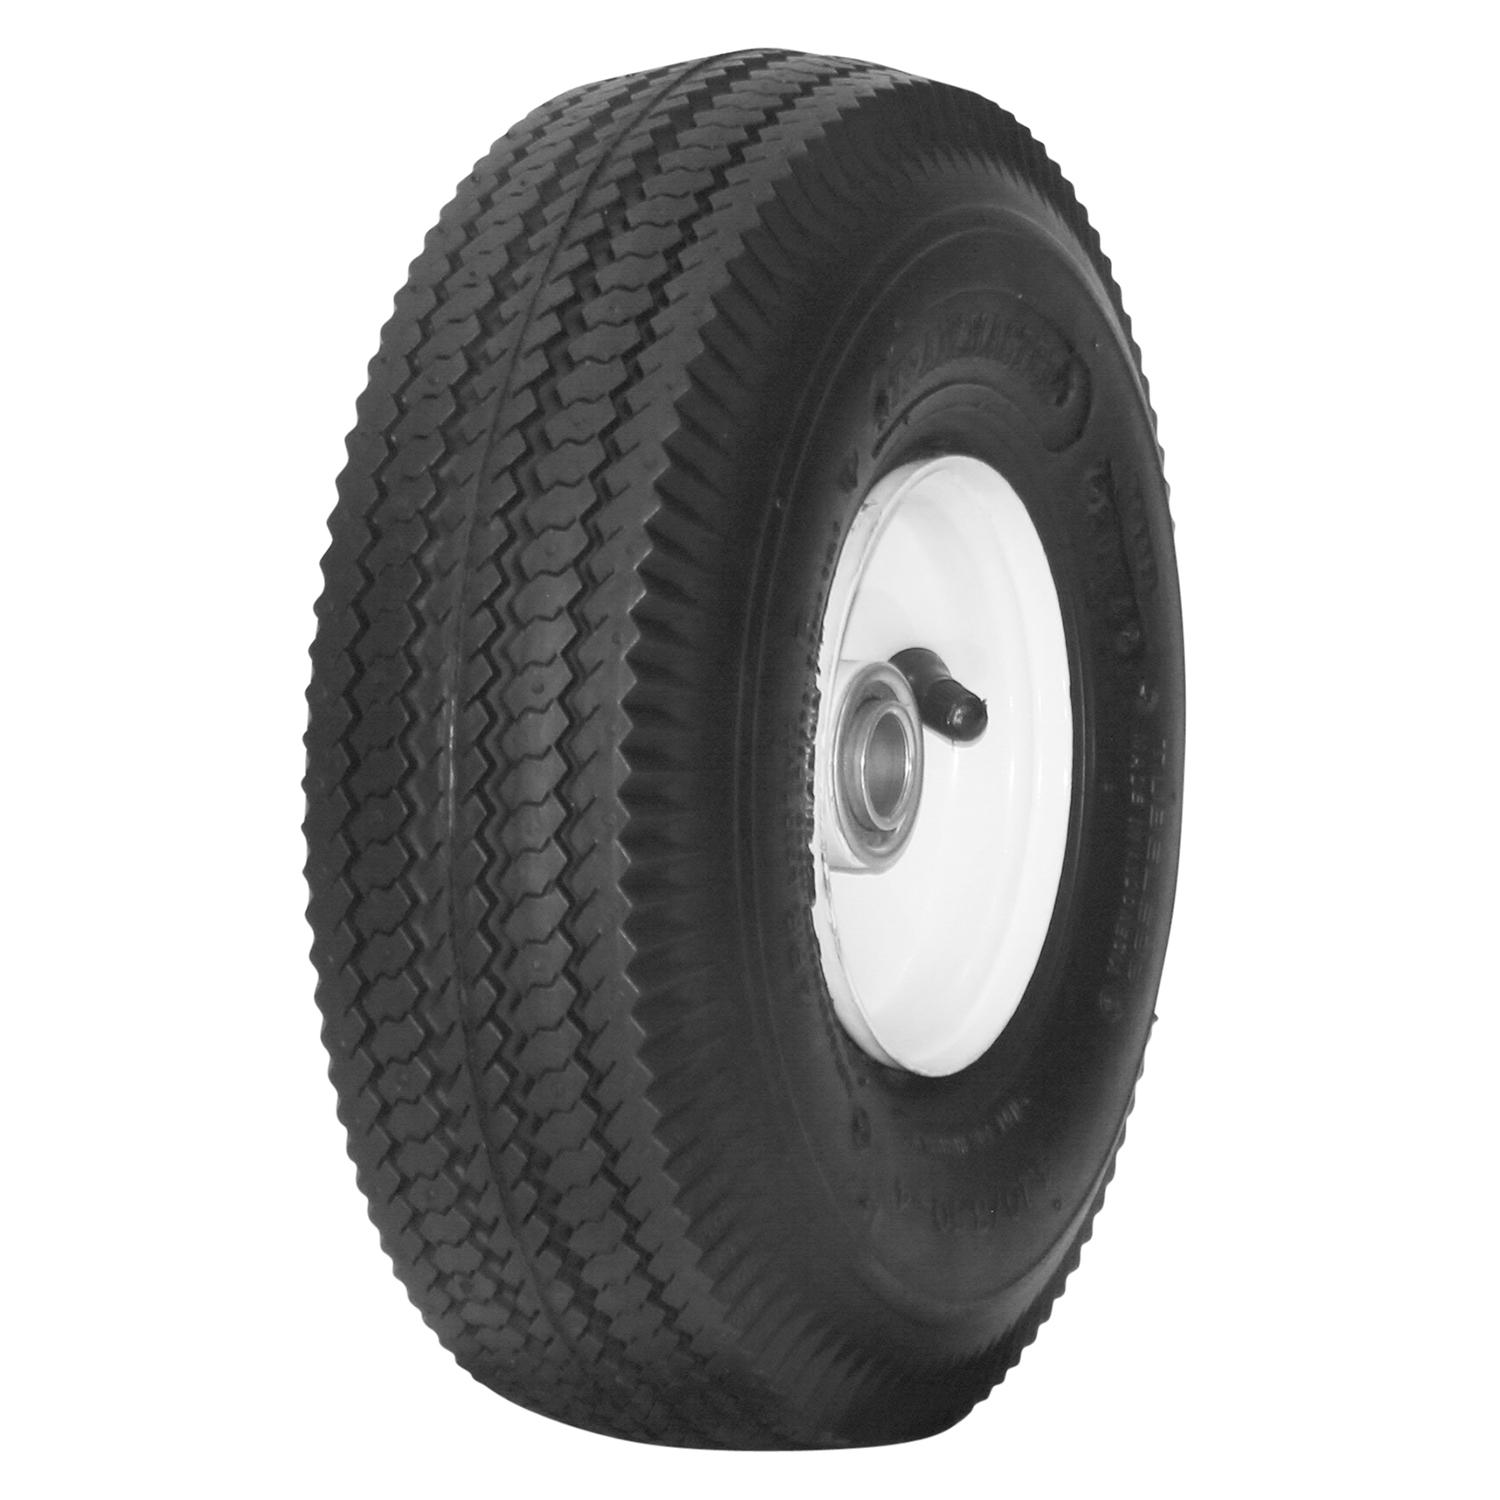 Greenball Sawtooth - 4.10/3.50-4 Lawn & Garden Tire